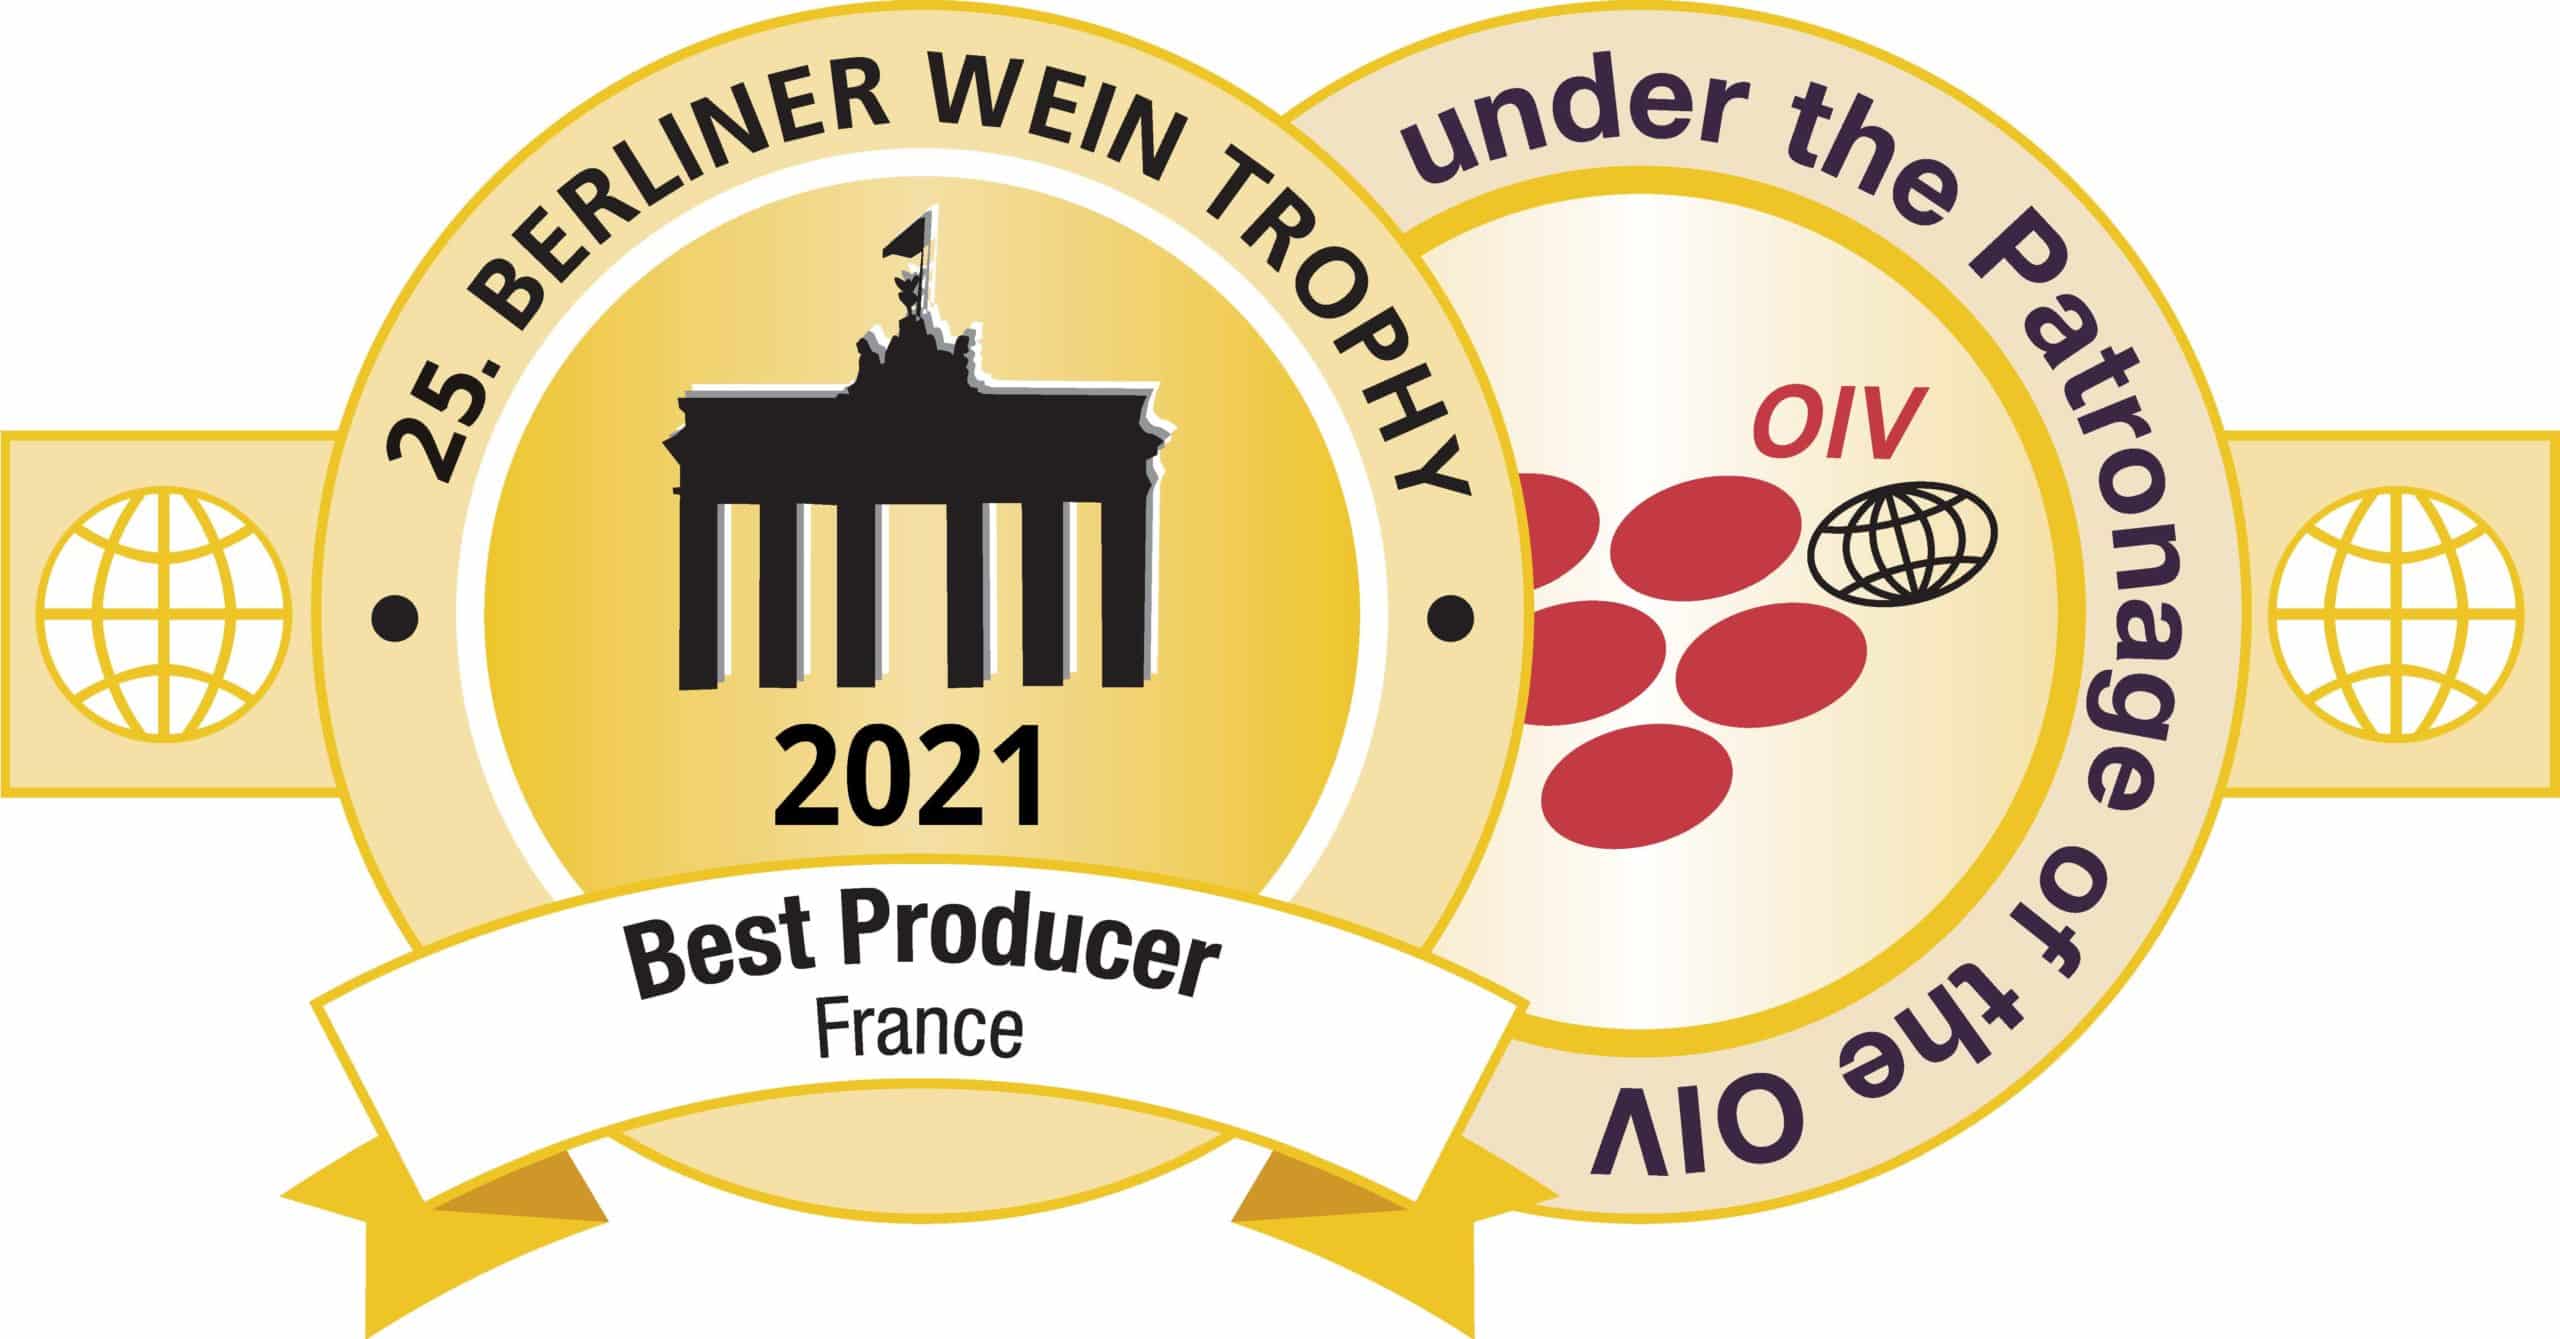 Best Producer “Still Wine” France – 2021 BWT